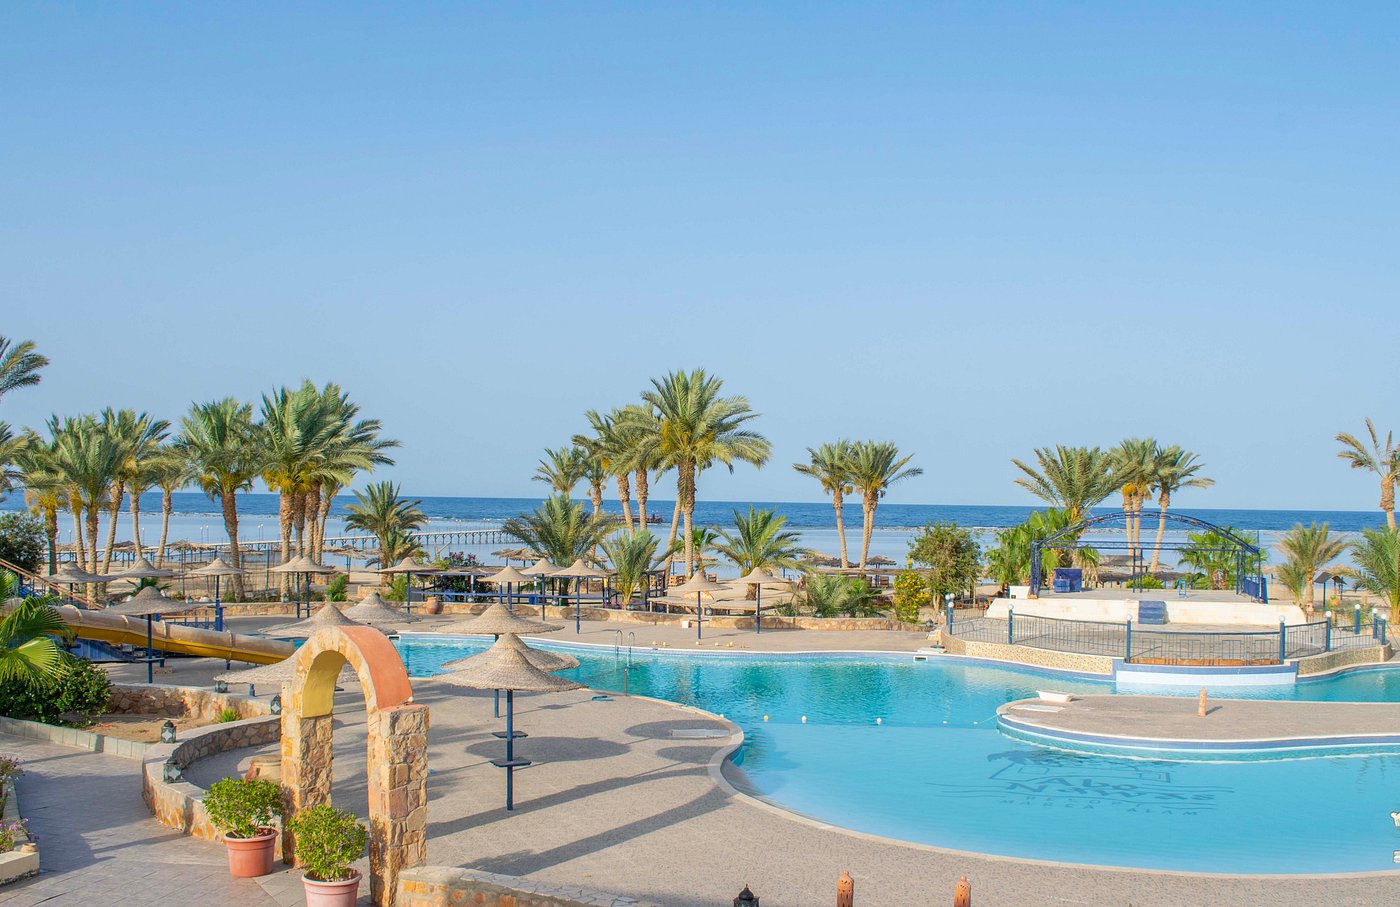 PROTELS CRYSTAL BEACH RESORT (Marsa Alam) - Hotel Reviews, Photos, Rate